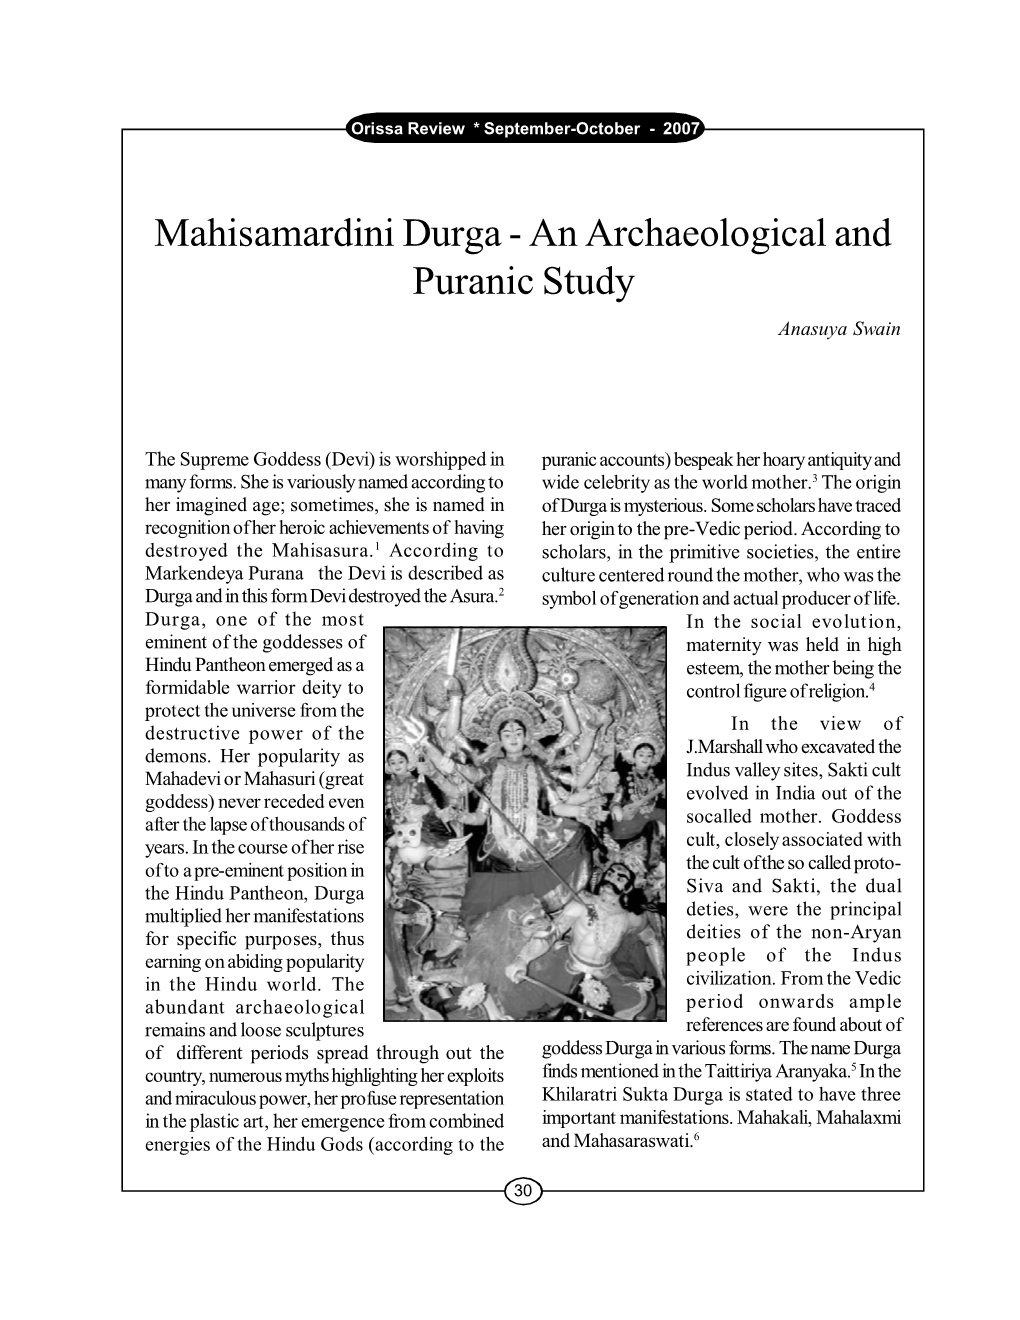 Mahisamardini Durga - an Archaeological and Puranic Study Anasuya Swain